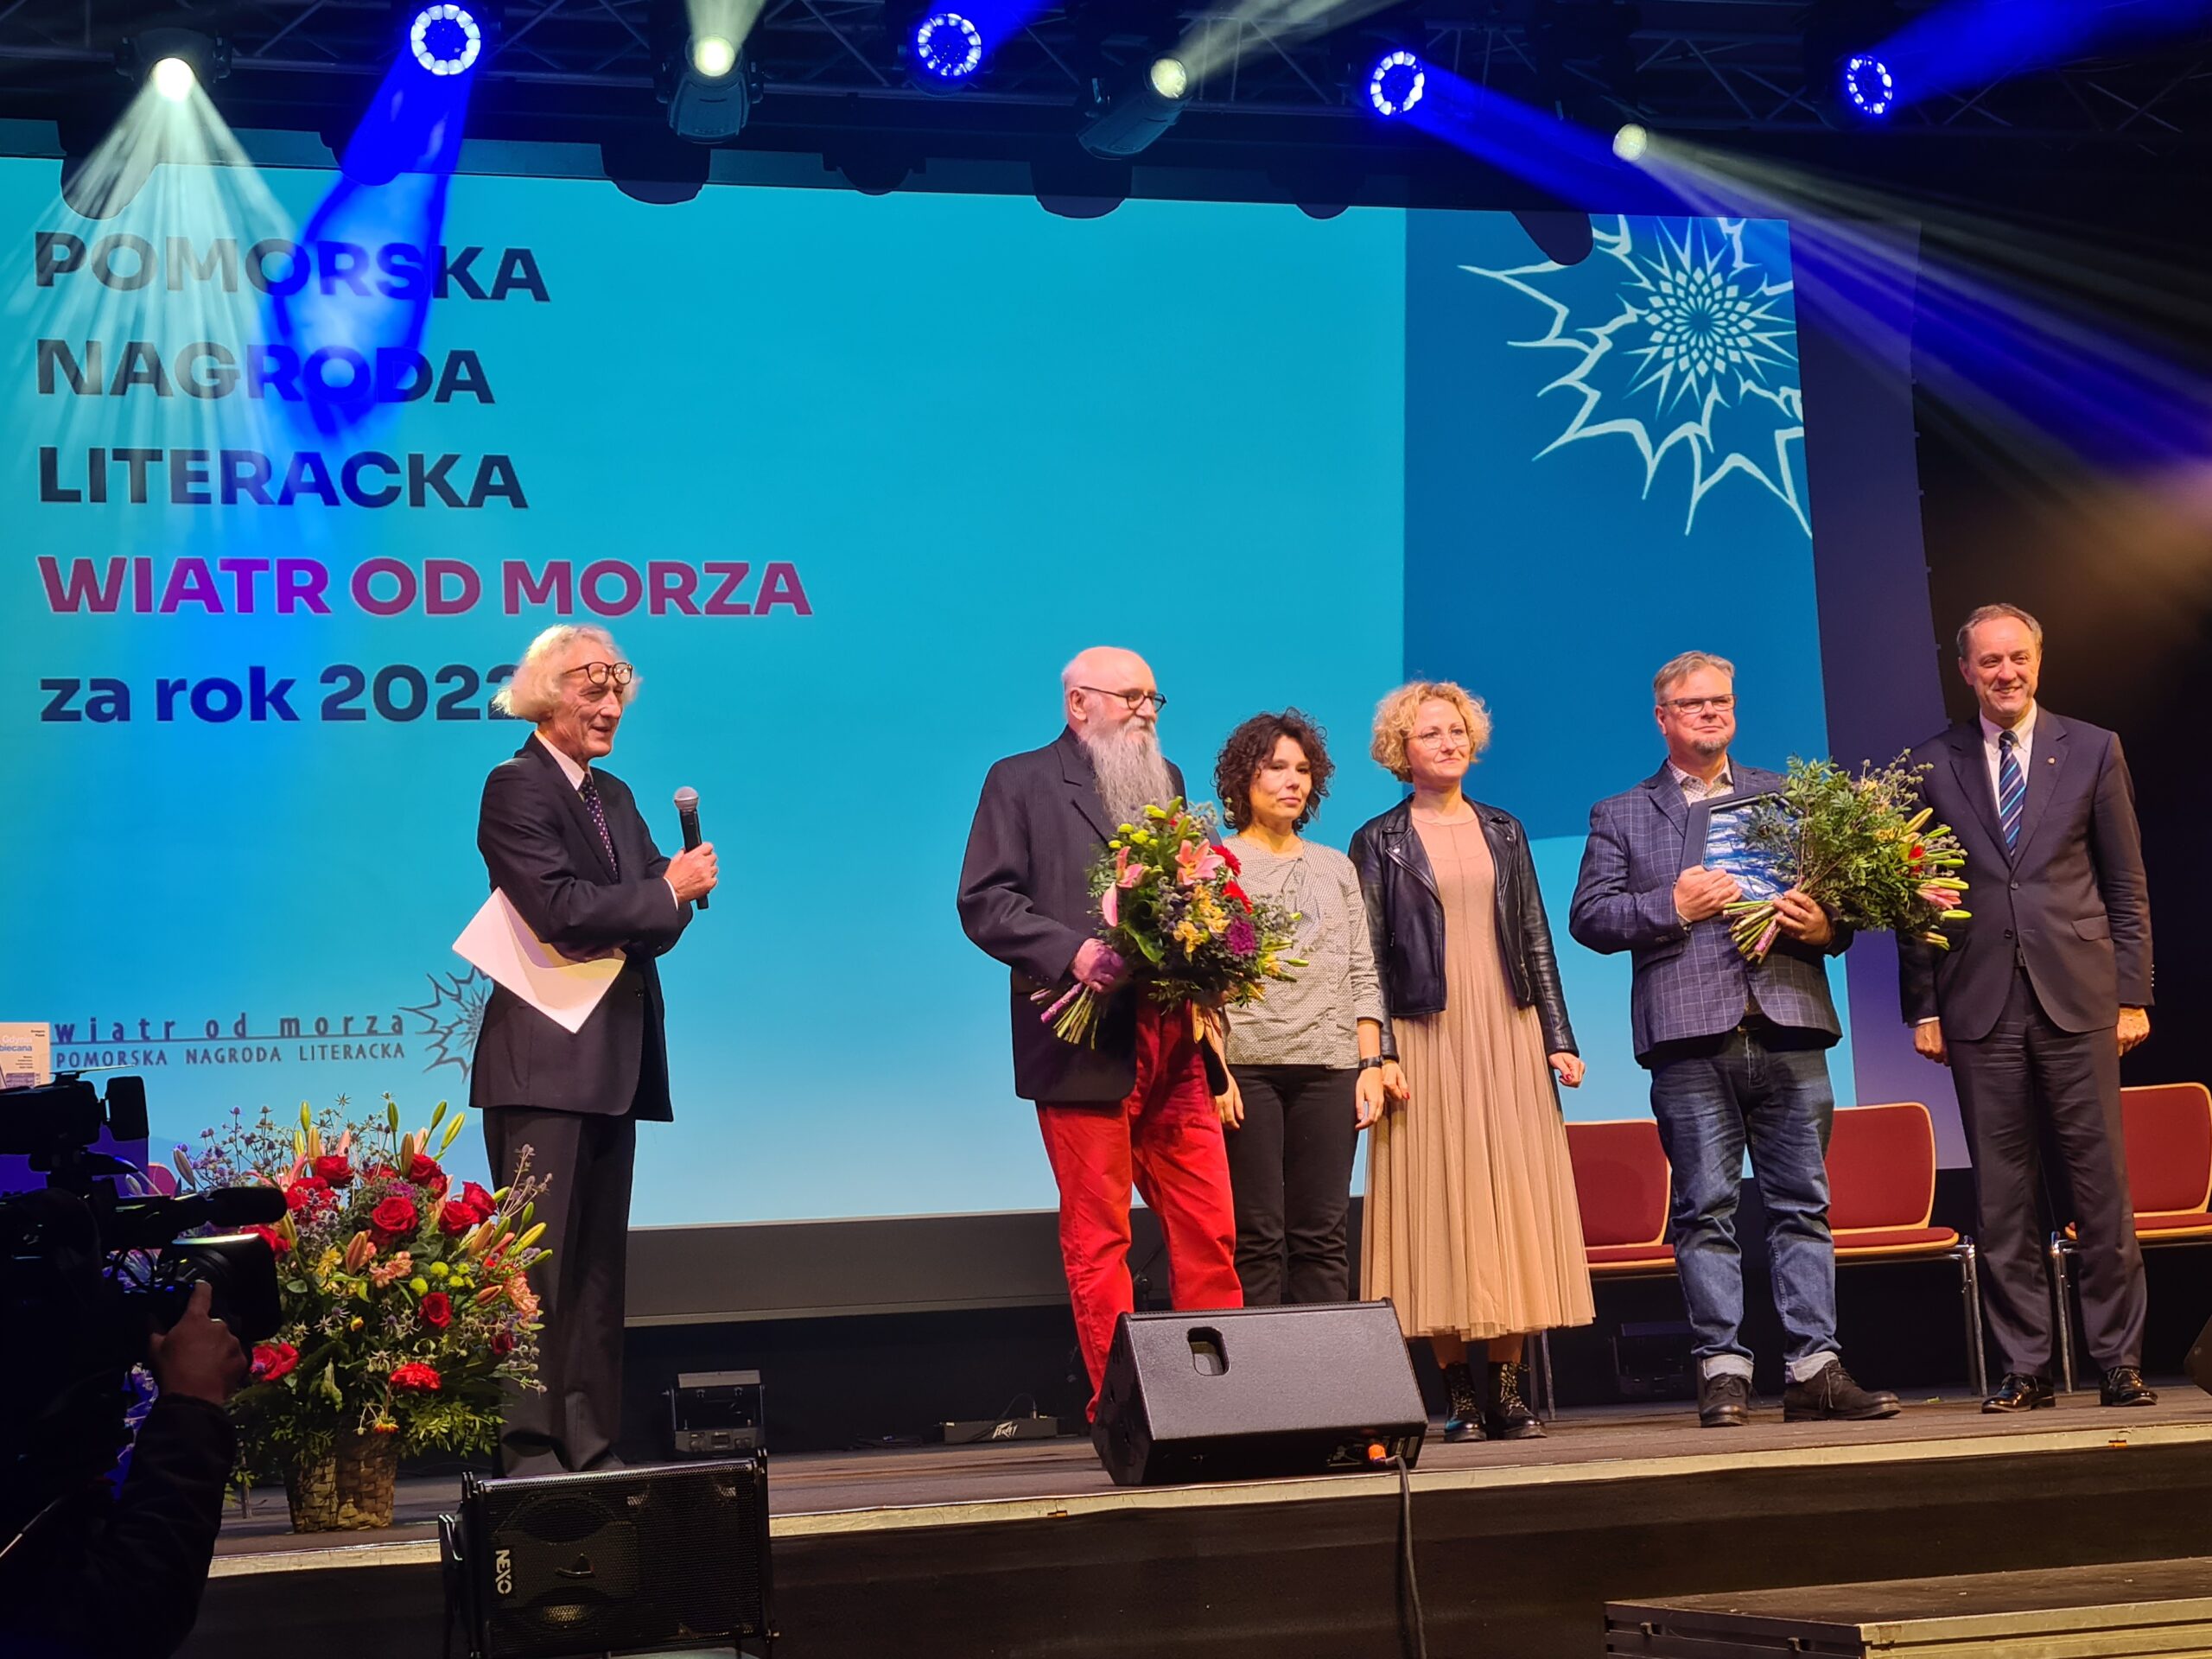 kaszubska-nagroda-literacka-radio-kaszebe-artur-jablonski